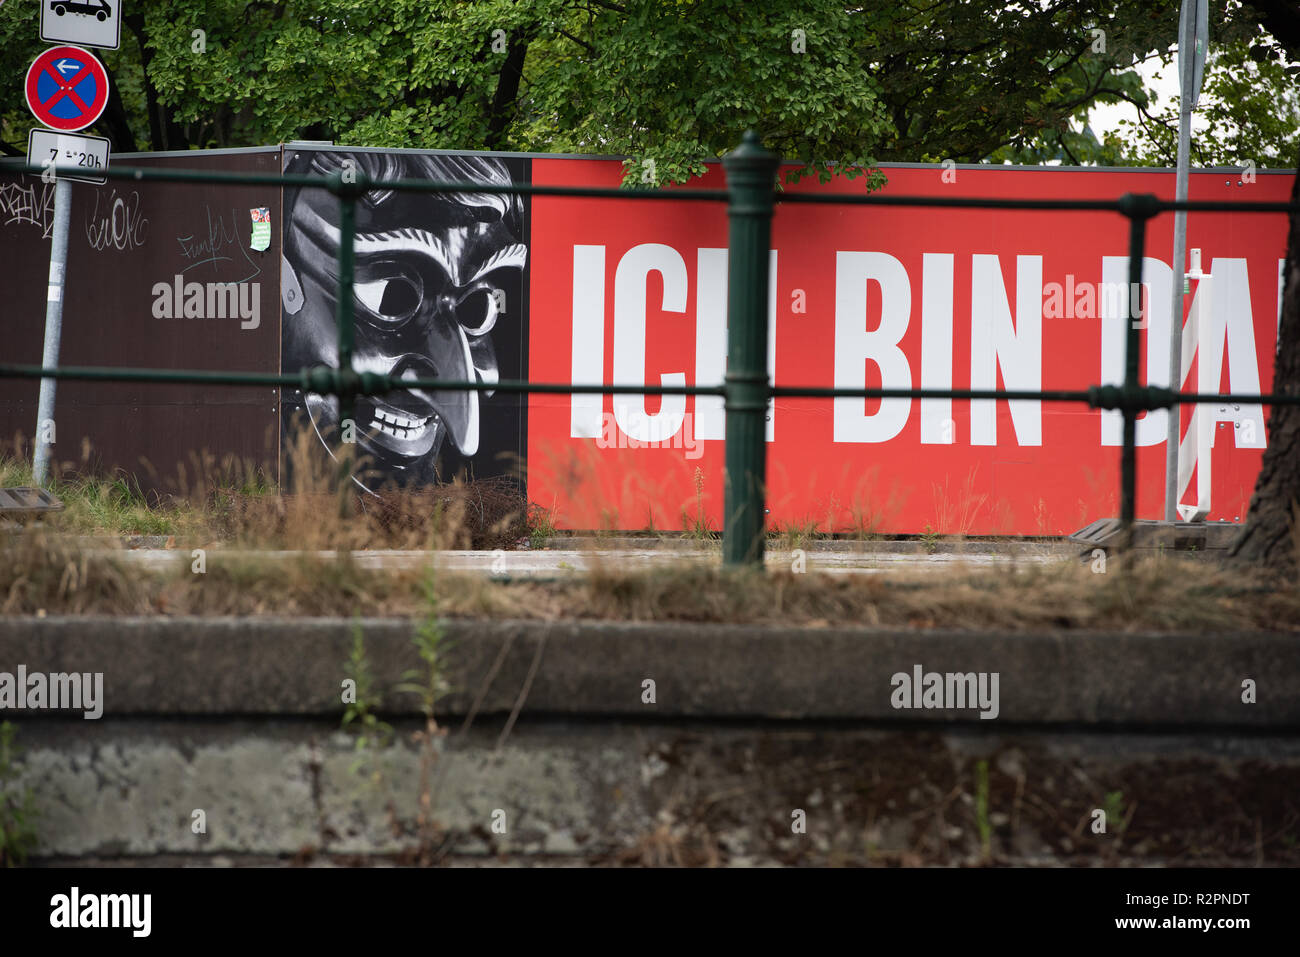 Ich bin da, Berlin, Spree, Graffiti, Stock Photo